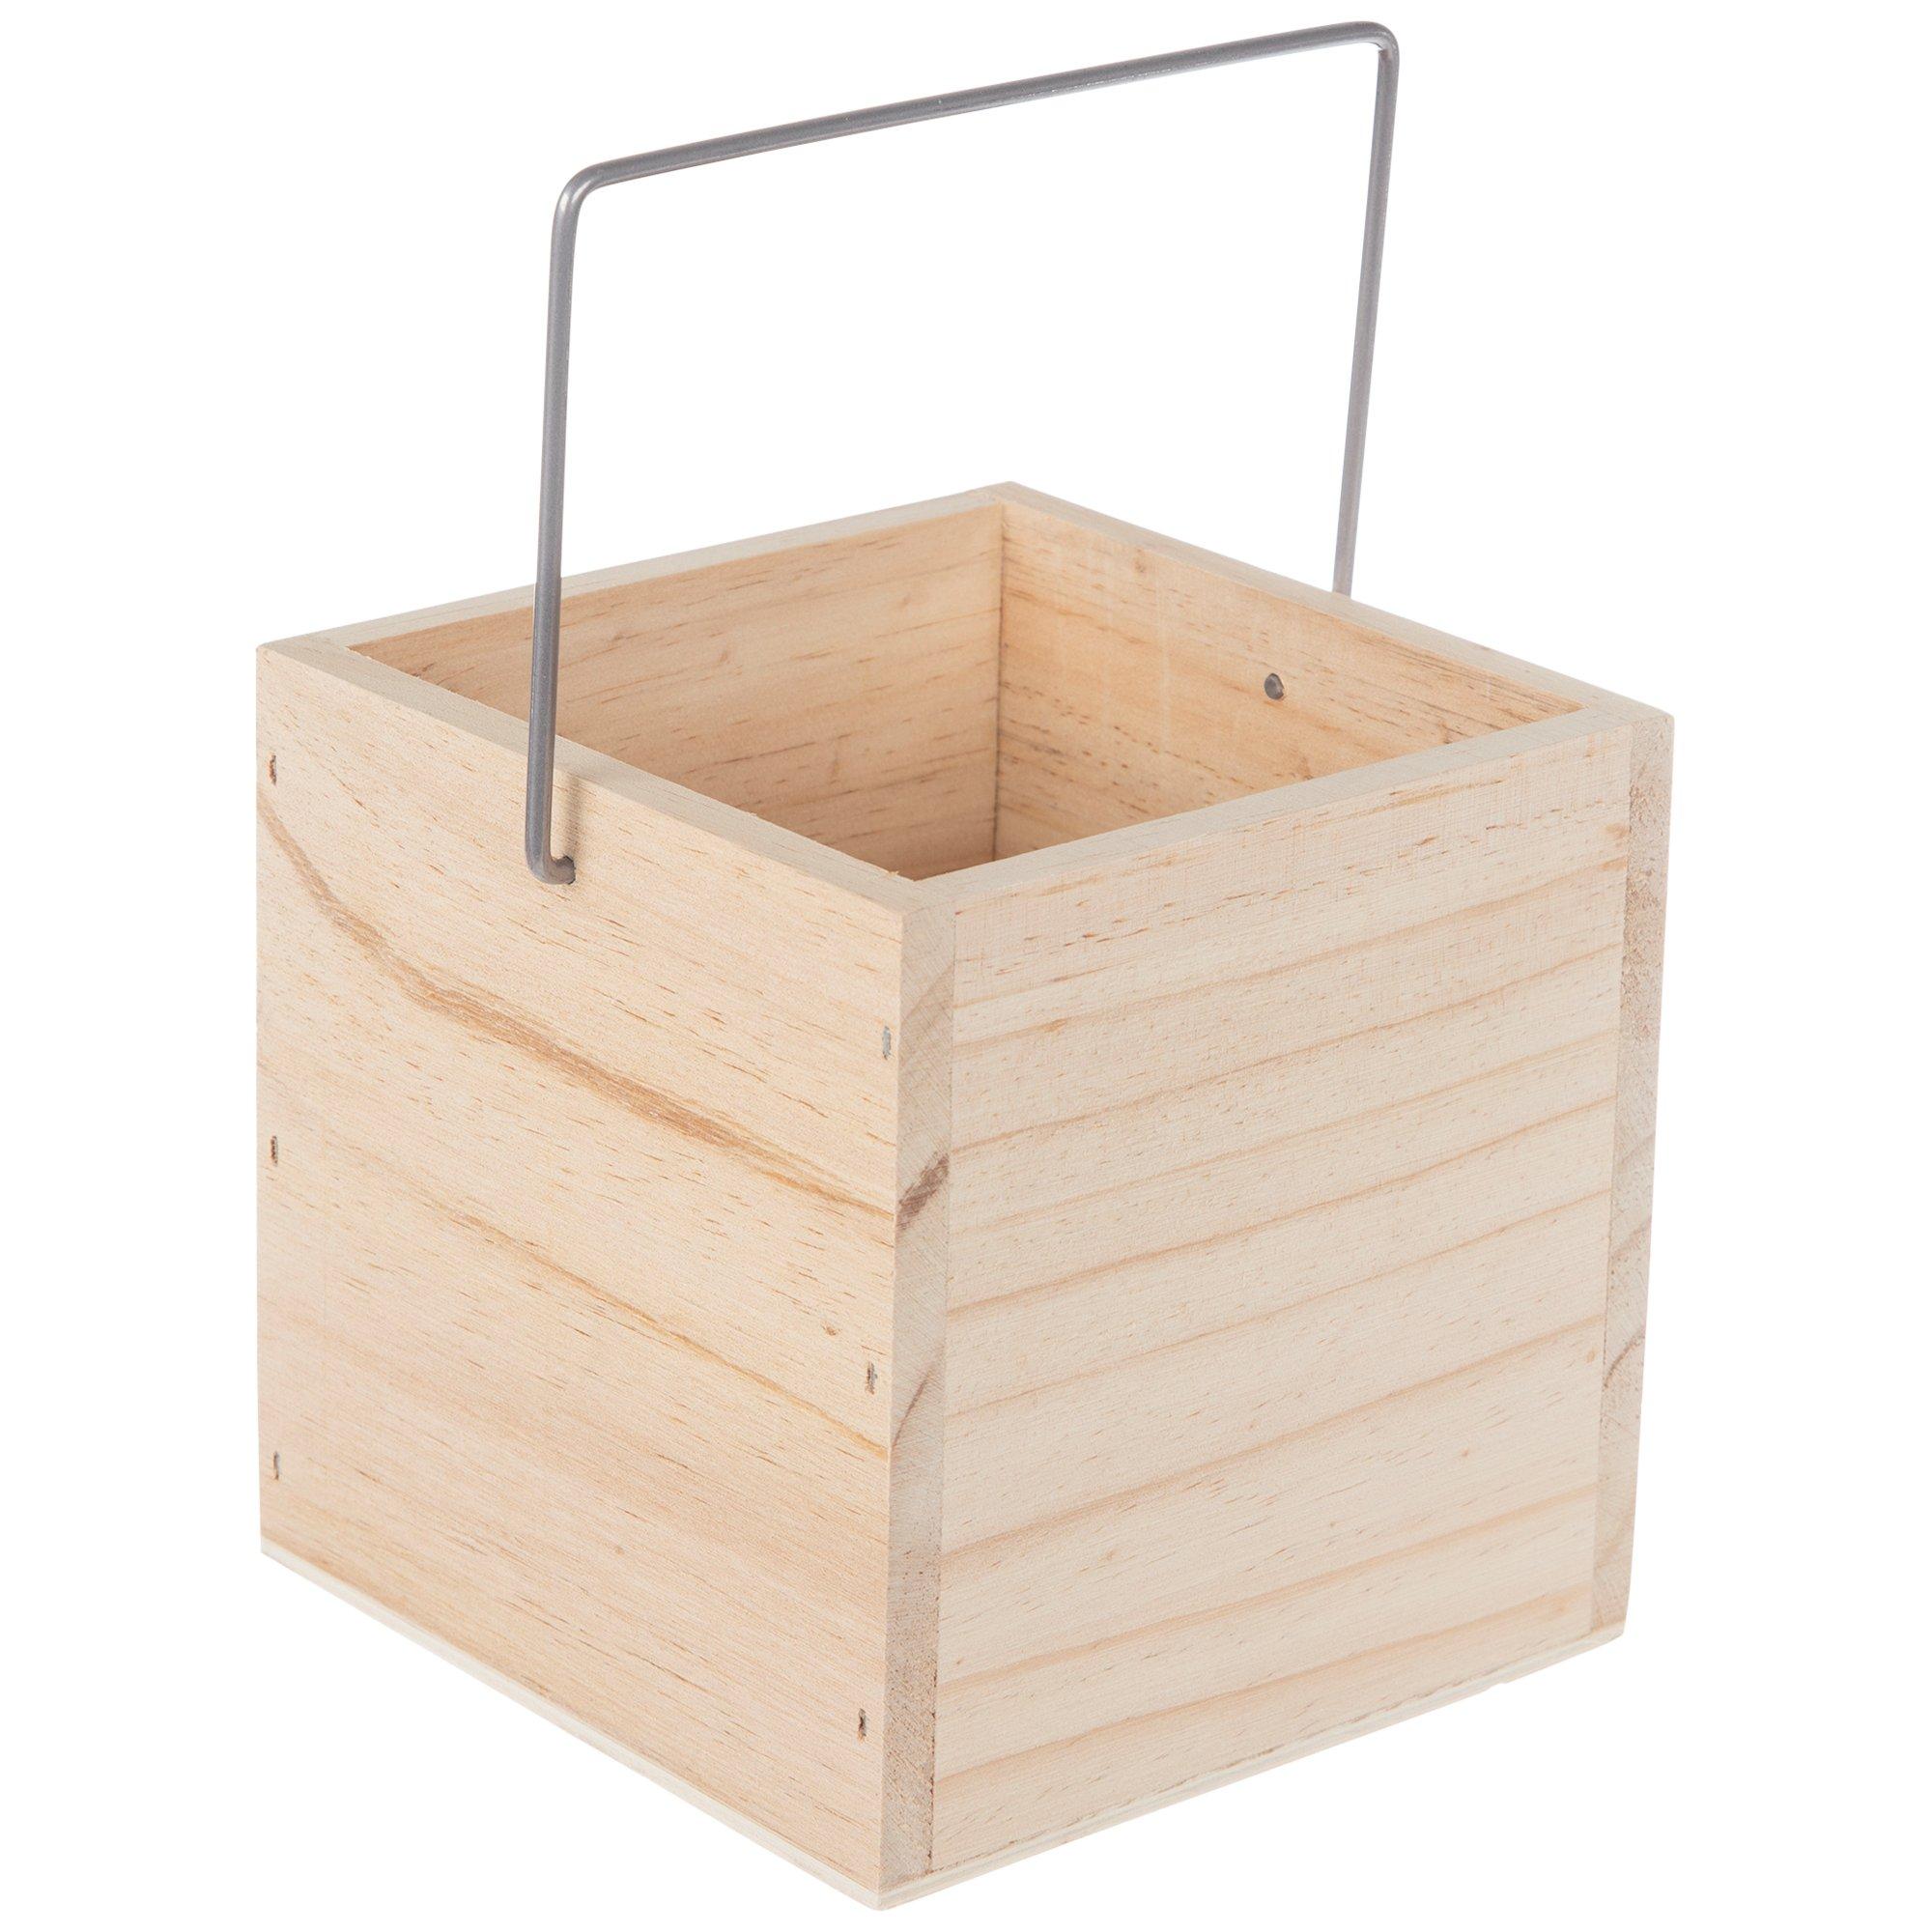 Rectangular Wood Box With Handles Set, Hobby Lobby